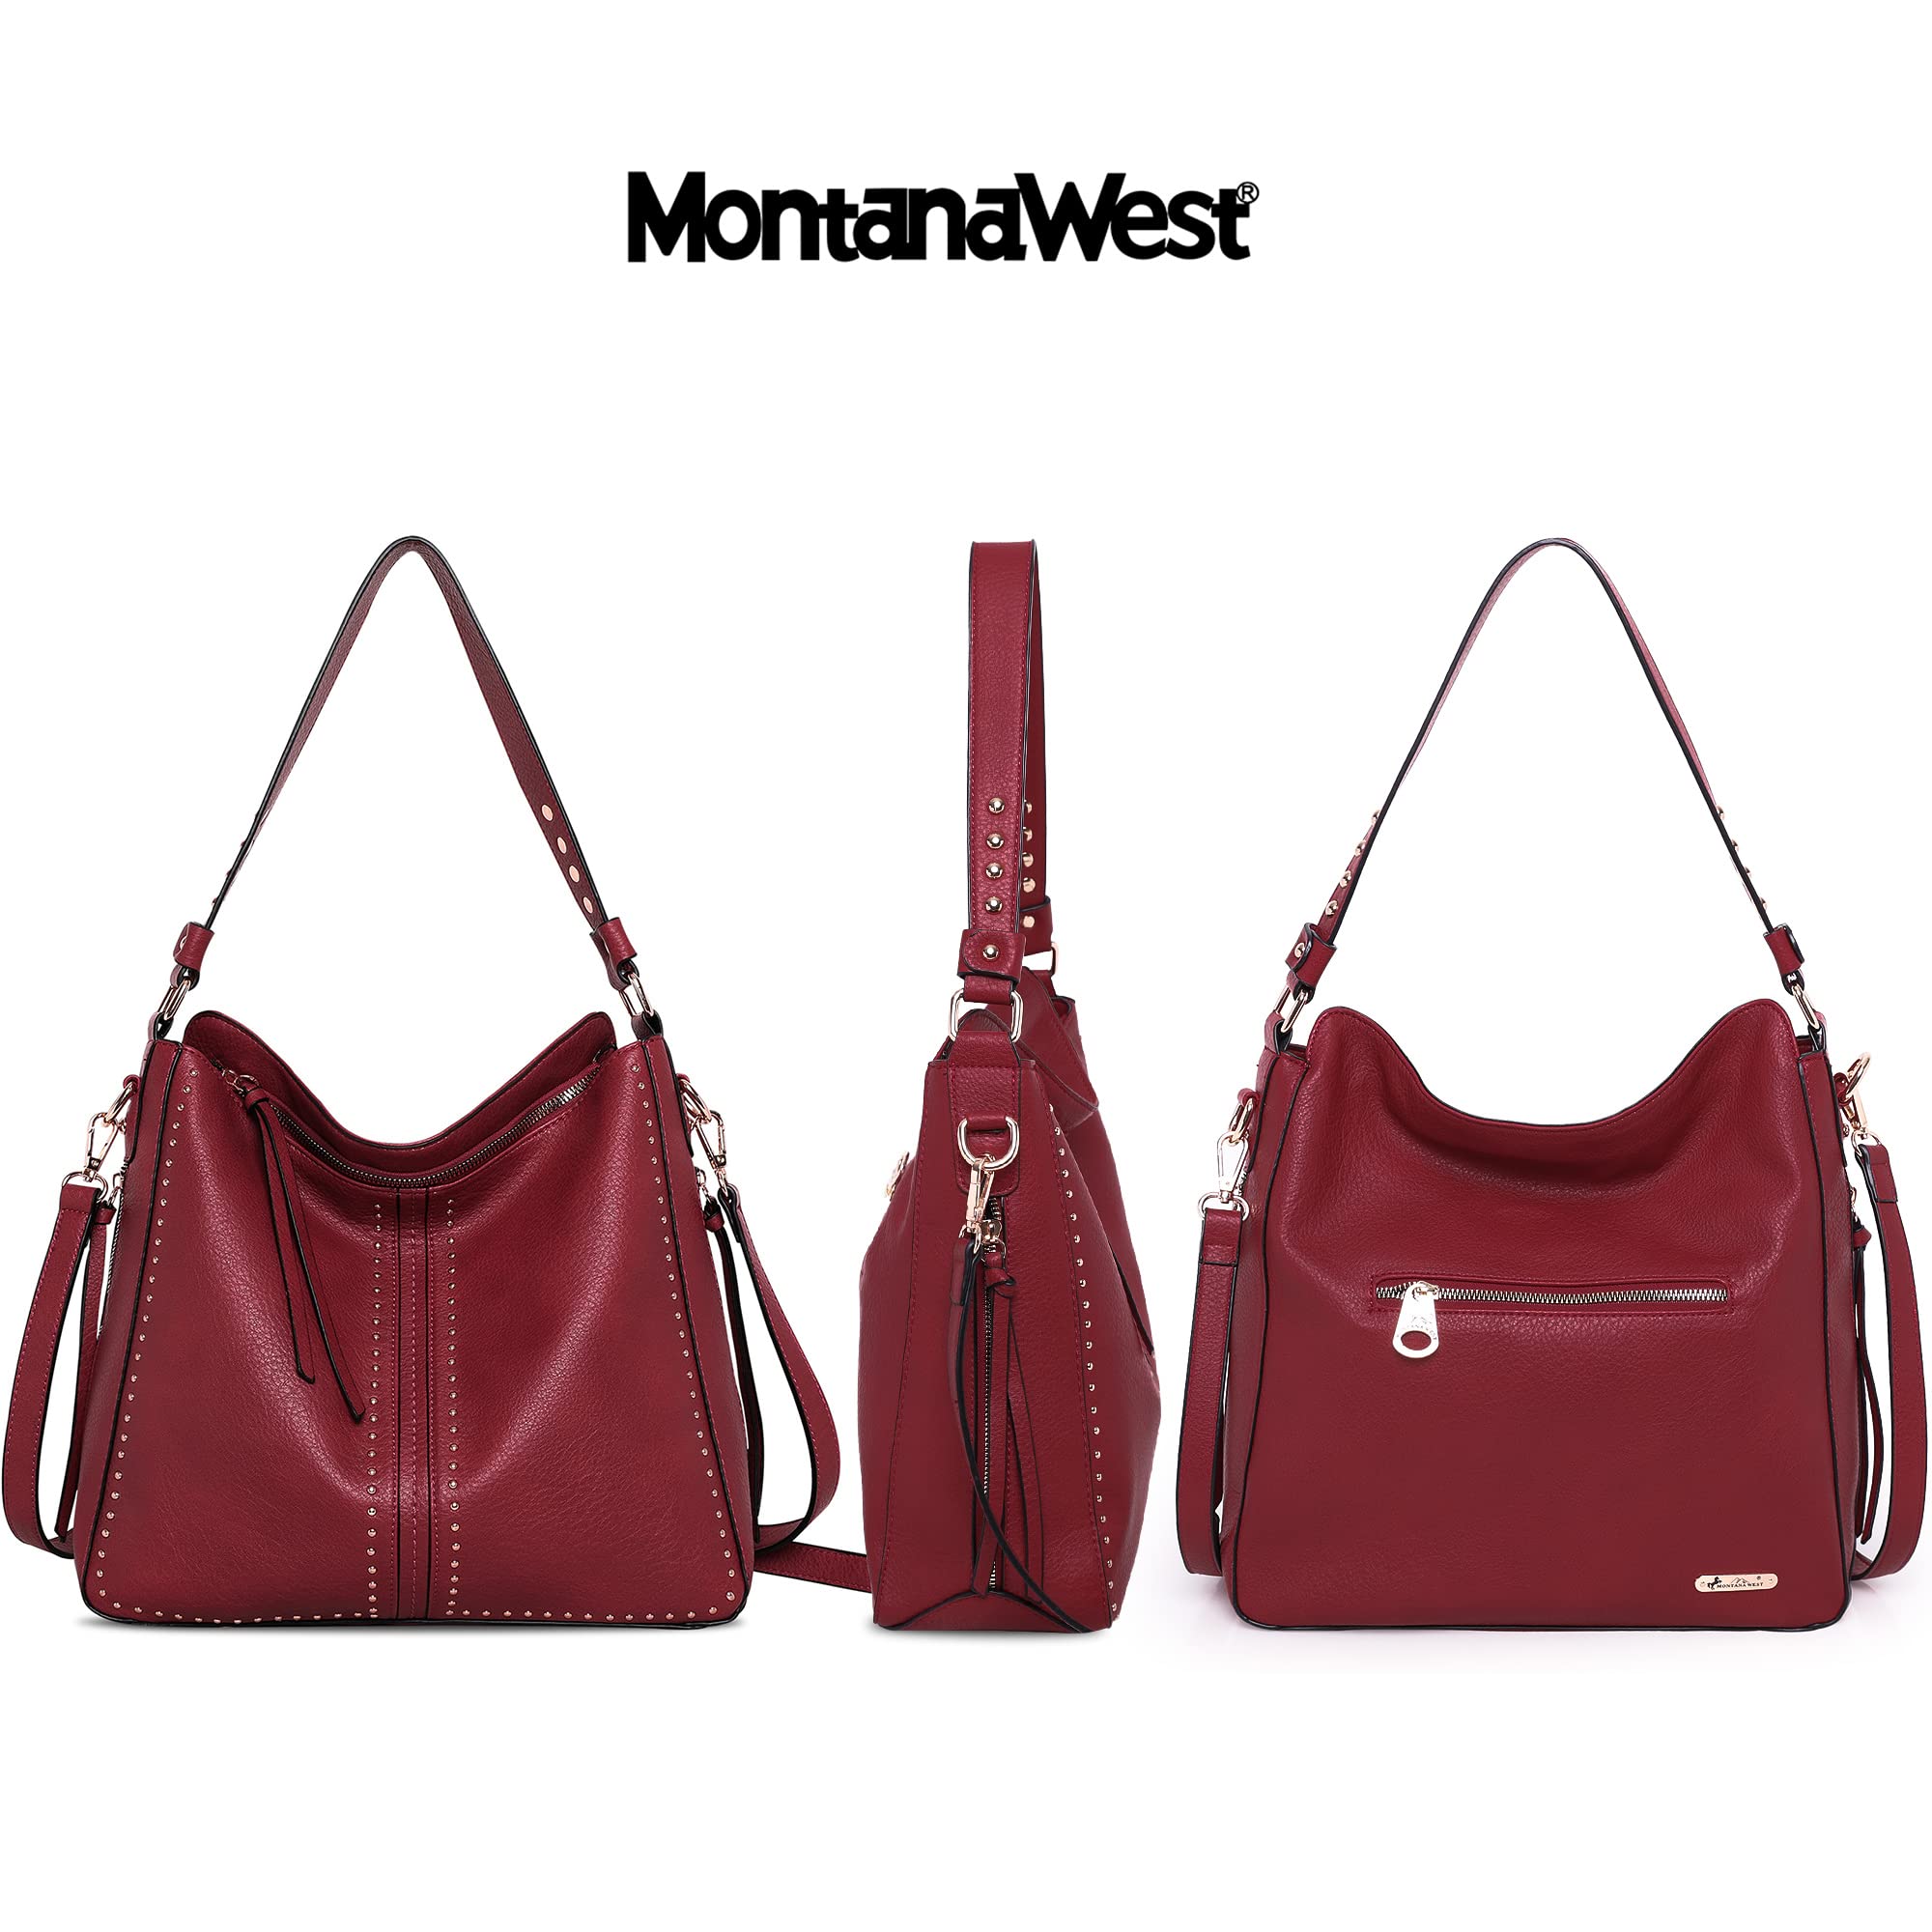 Montana West Hobo Handbag for Women Large Purses and Handbags with Studs and Crossbody Strap